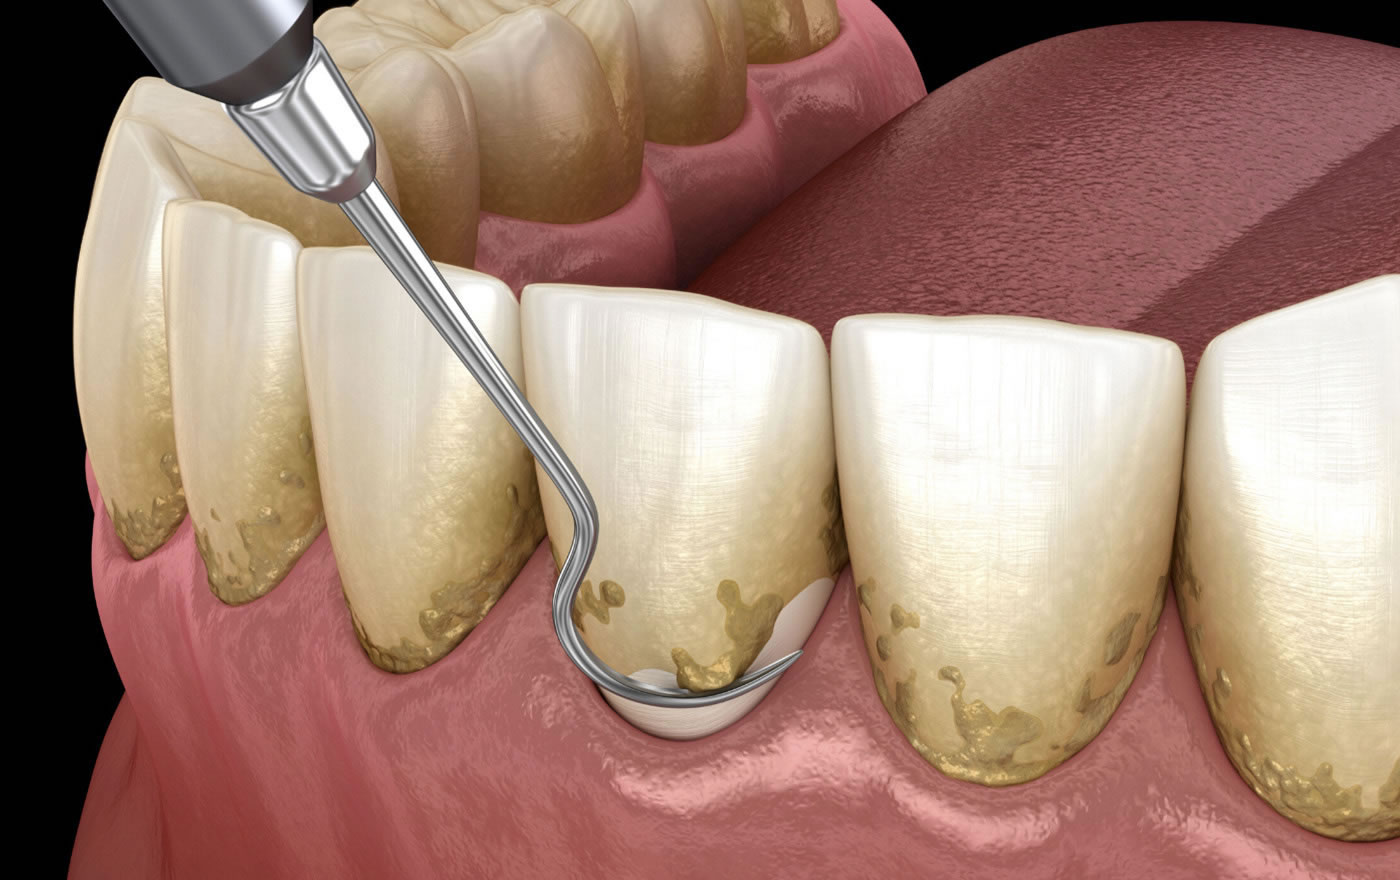 Tratamiento periodontal curetajes raspado